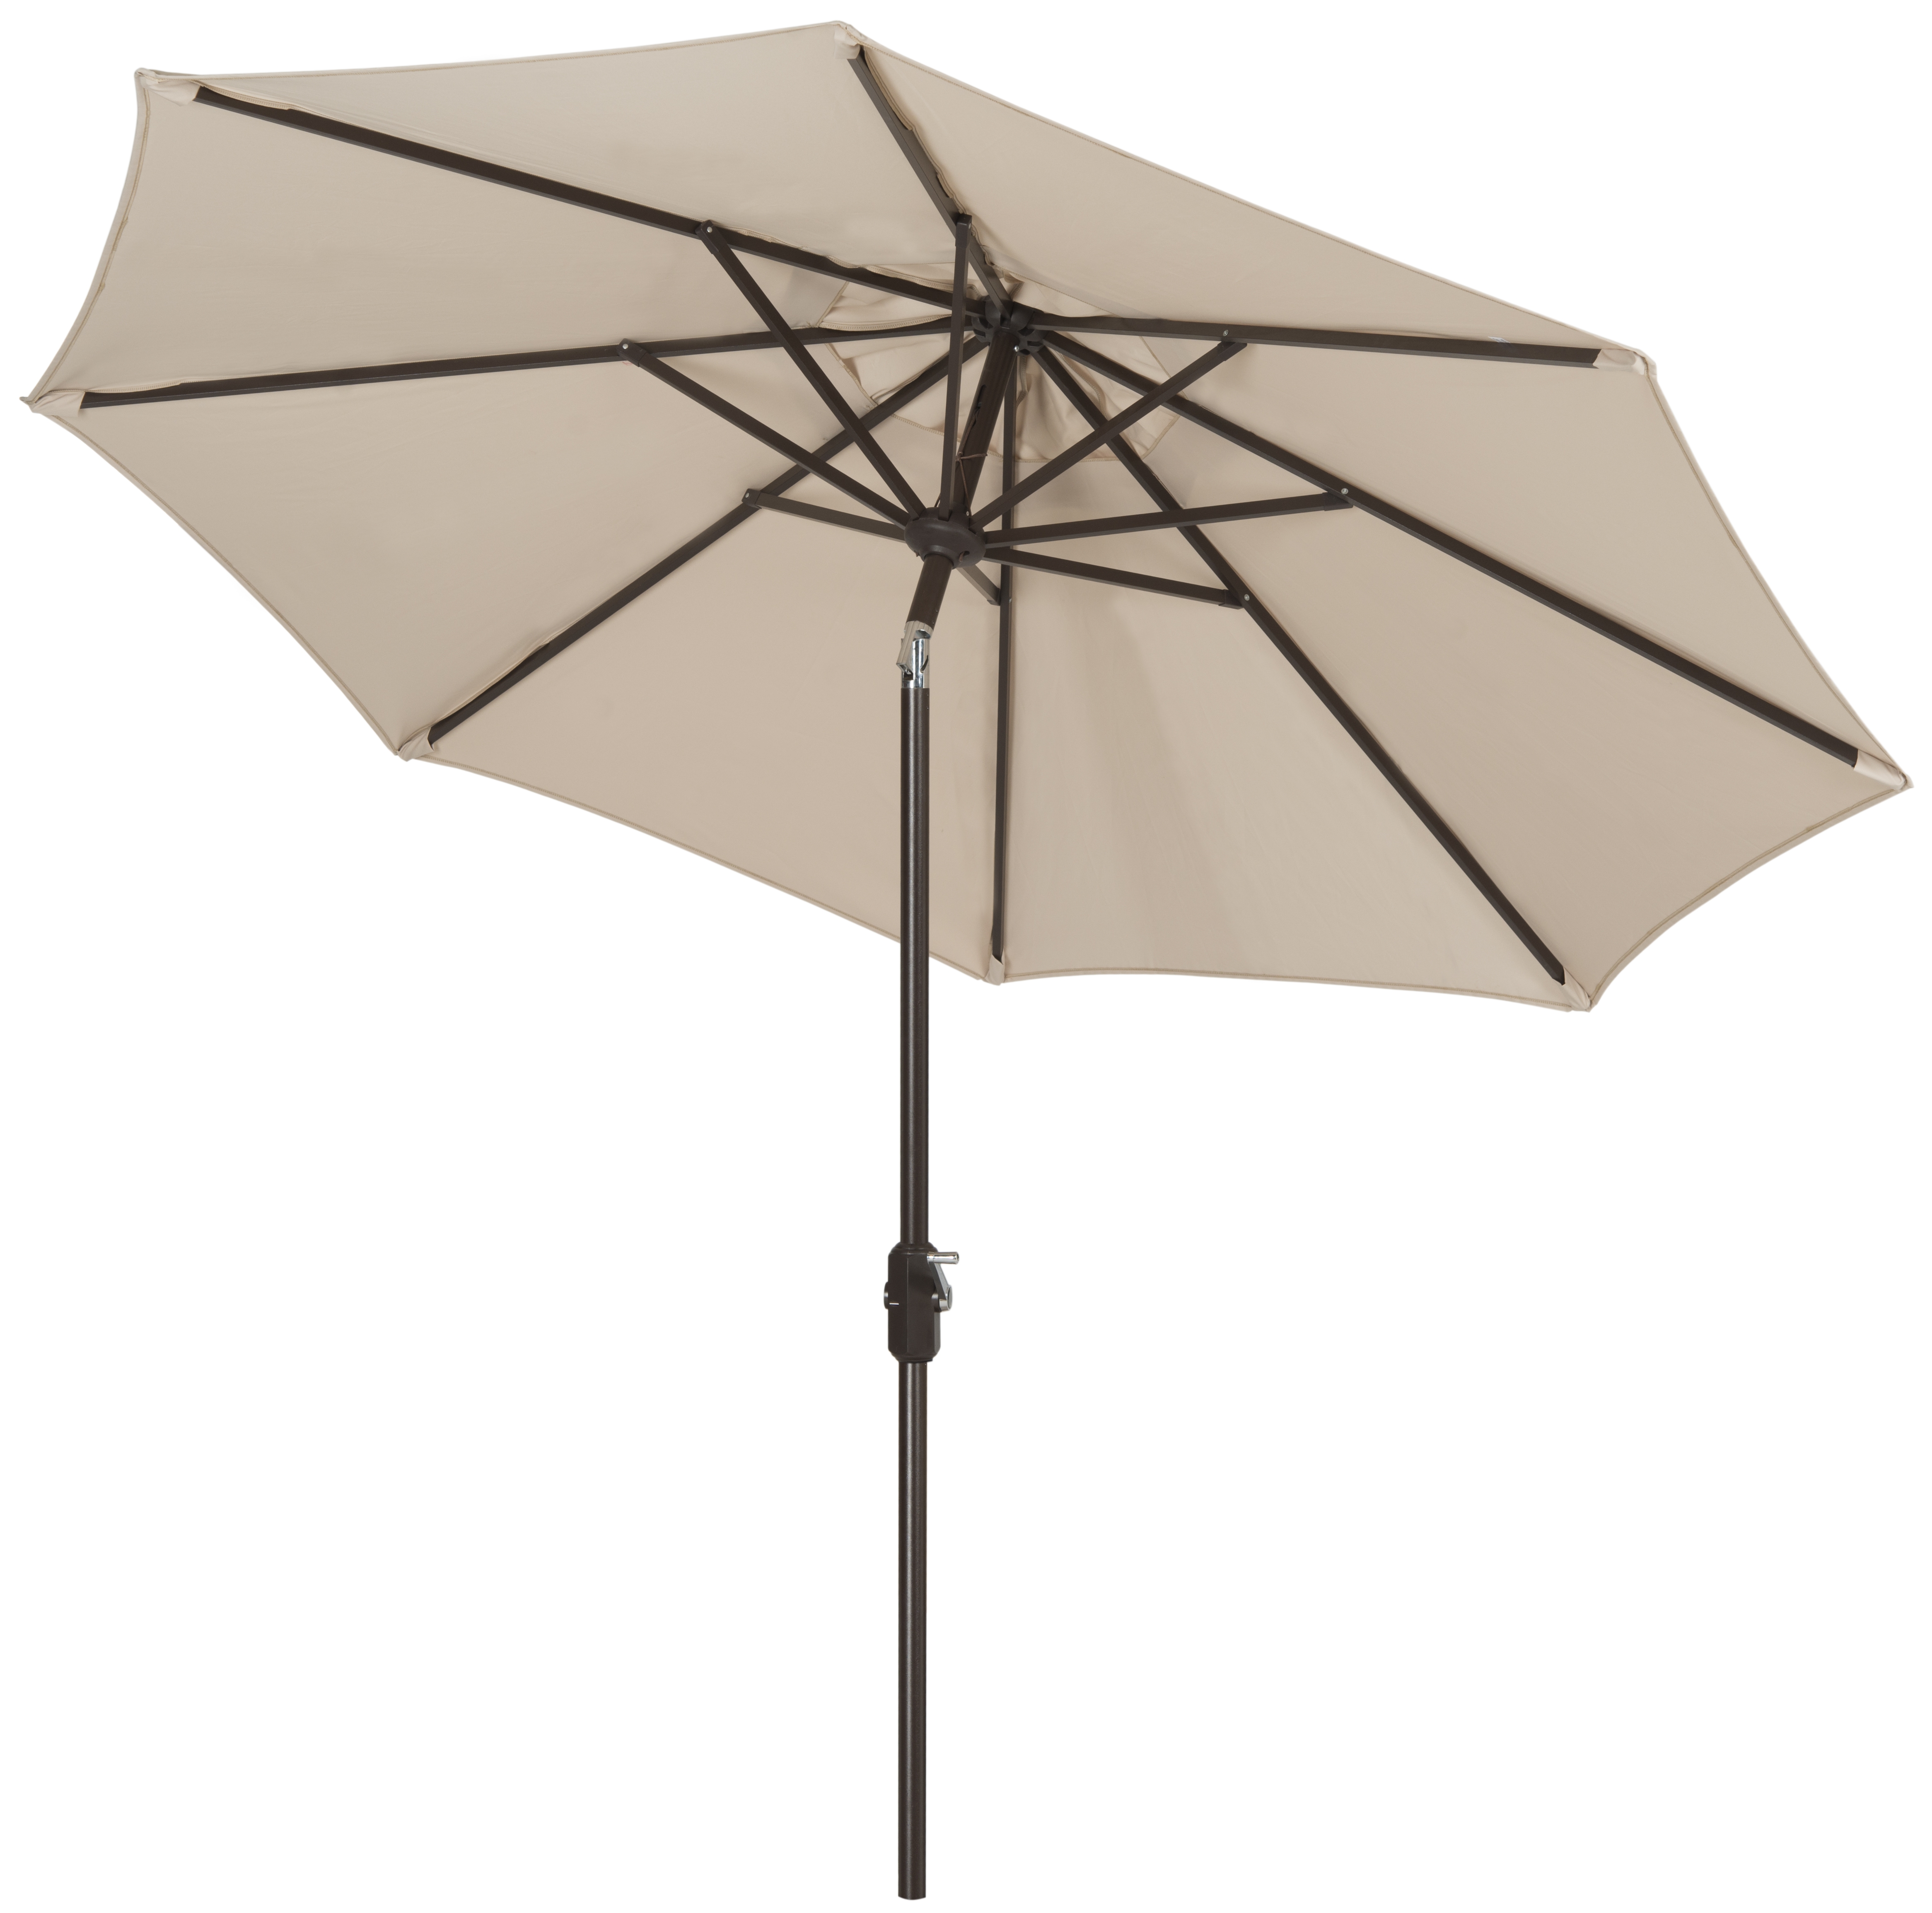 Uv Resistant Ortega 9 Ft Auto Tilt Crank Umbrella - Beige - Arlo Home - Image 1